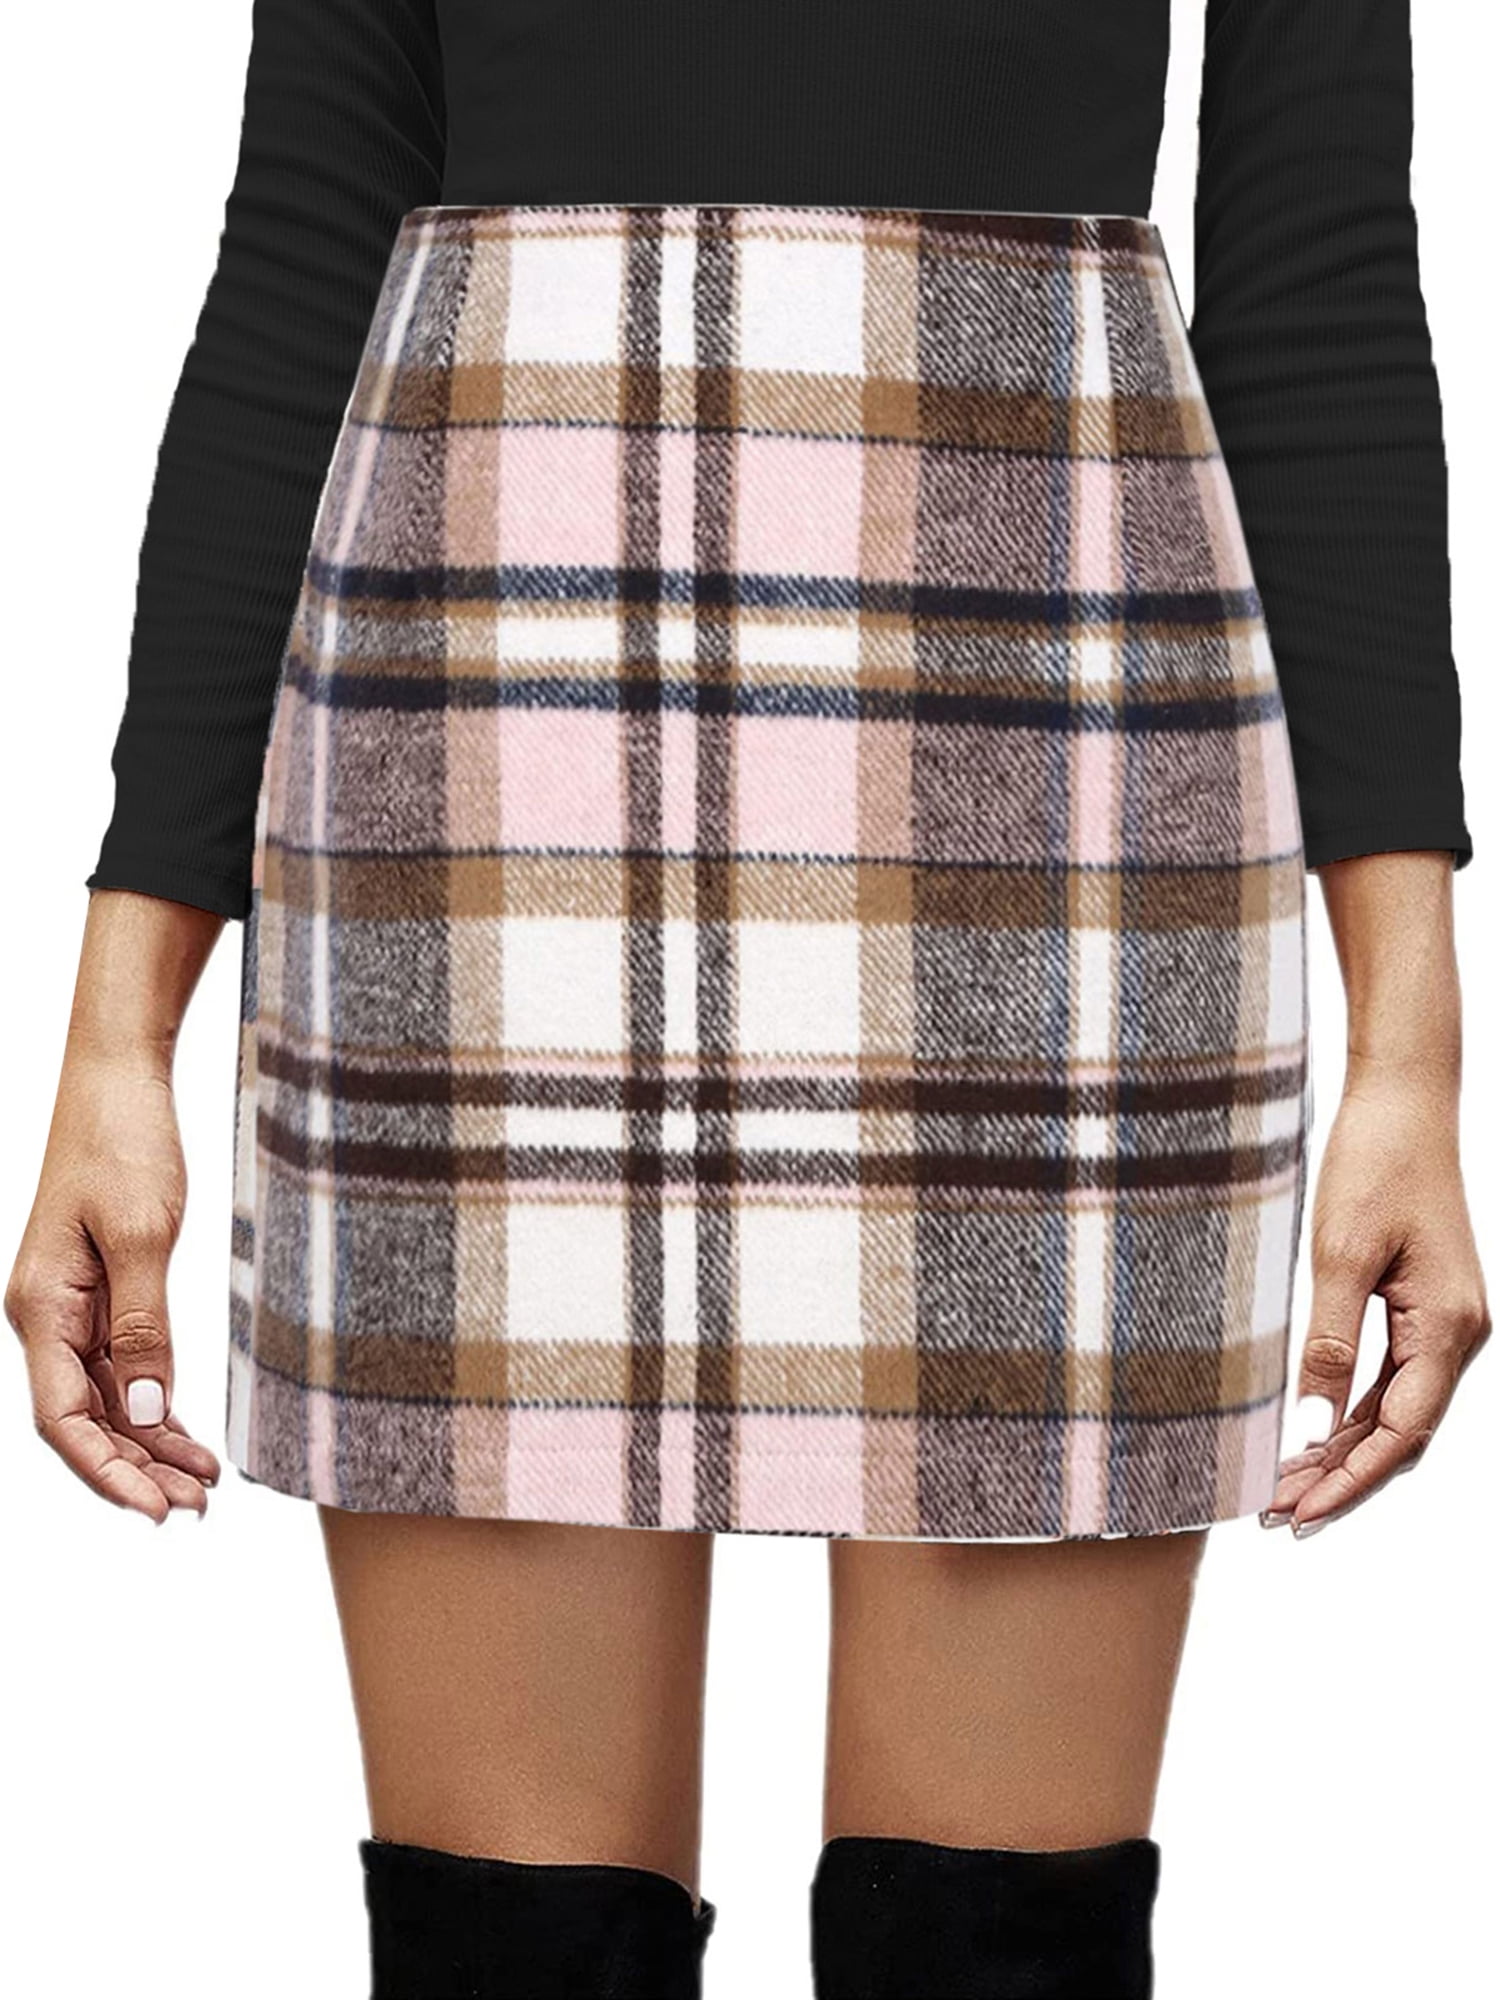 New Autumn Winter Women Ladies Slim High Waist Pencil Shirt Knitted Skirt |  eBay